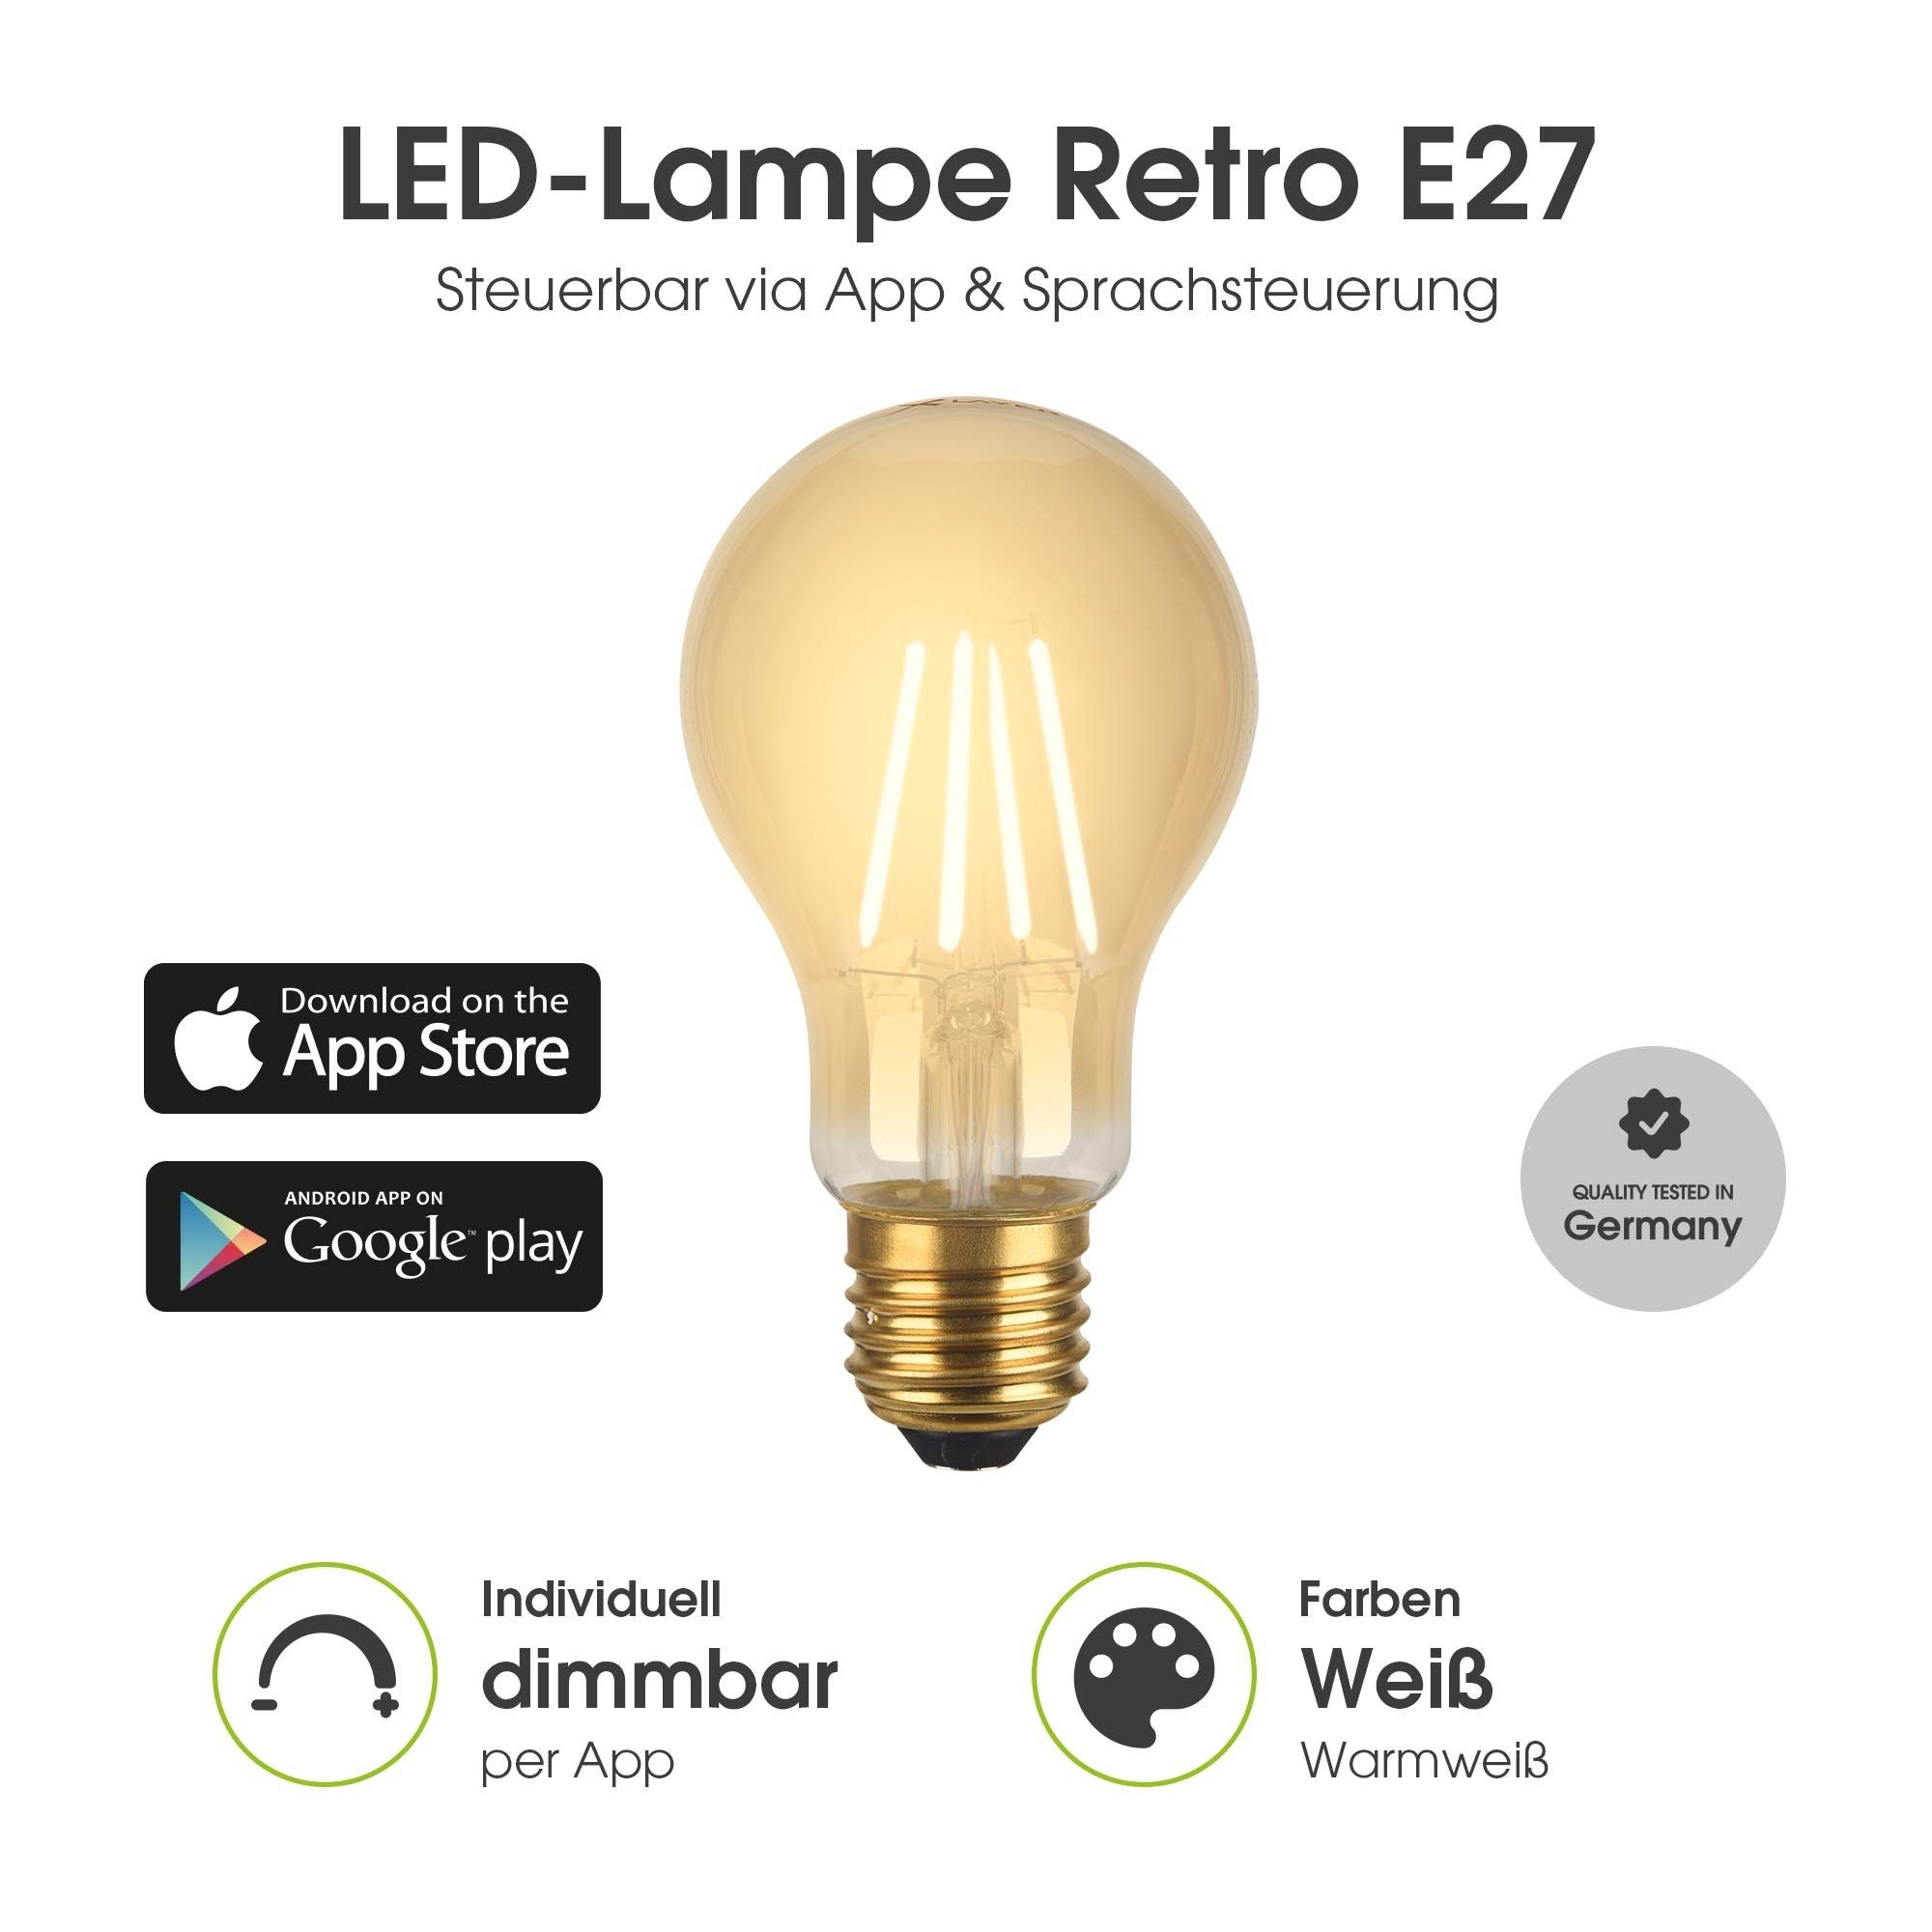 XLAYER Smarte LED-Leuchte WLAN LED Lampe Smart Echo Retro E27 5W Warmweiß Dimmbar